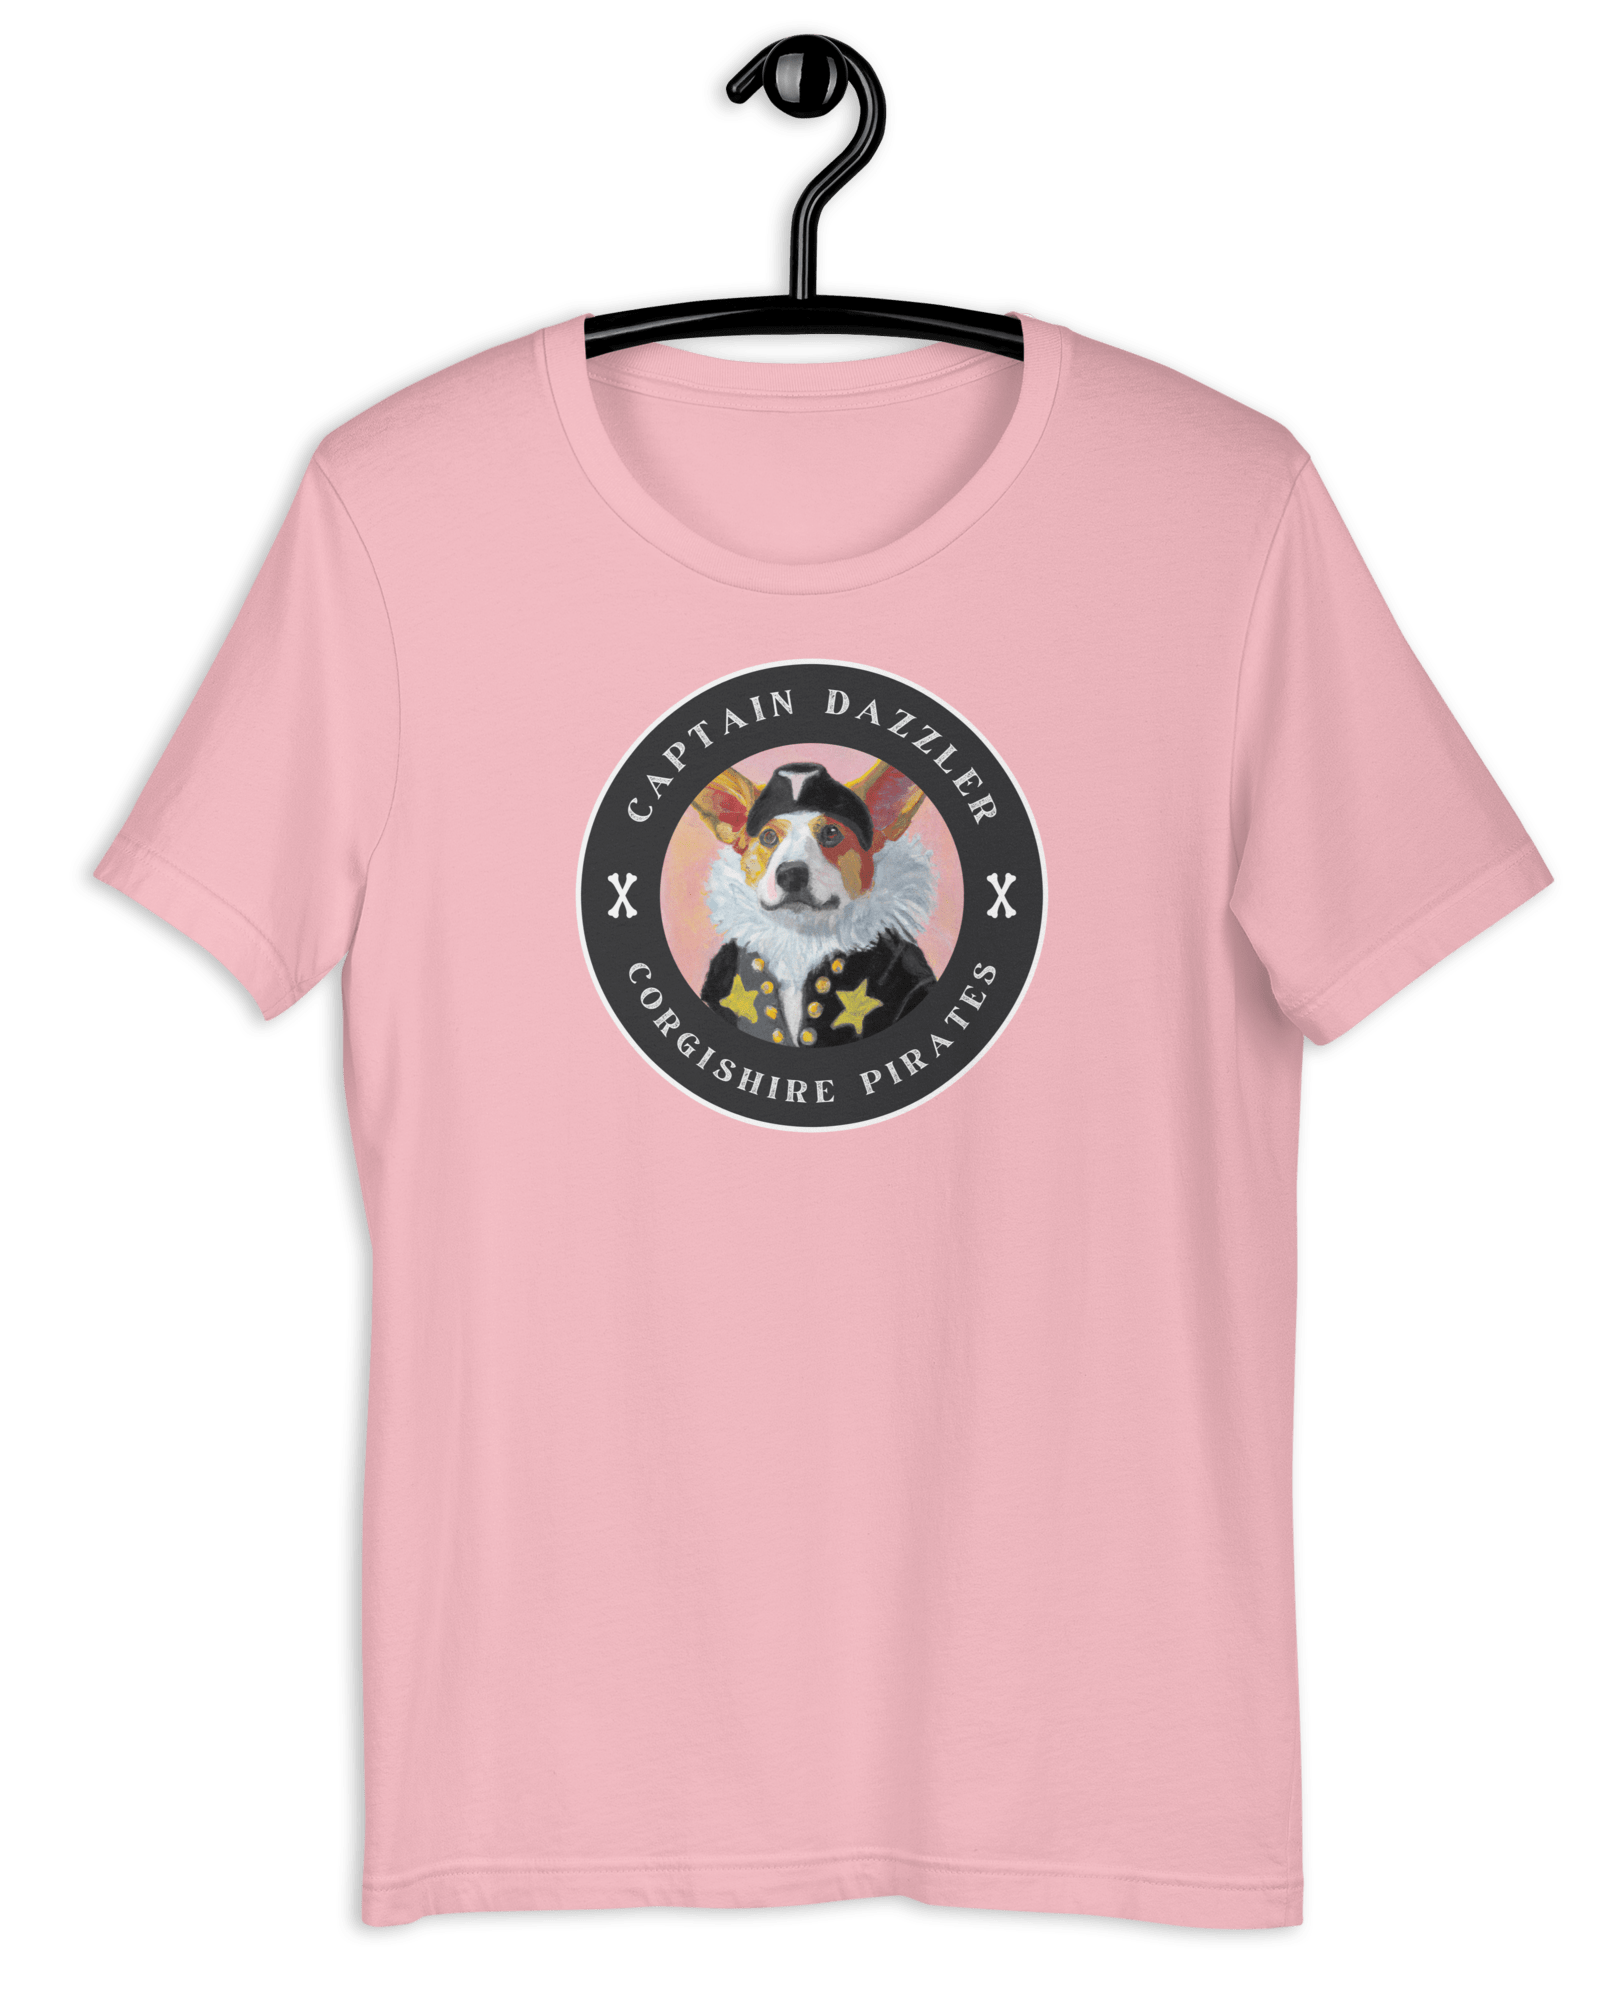 Captain Dazzler Corgishire Pirates T-shirt Pink / S Shirts & Tops Jolly & Goode